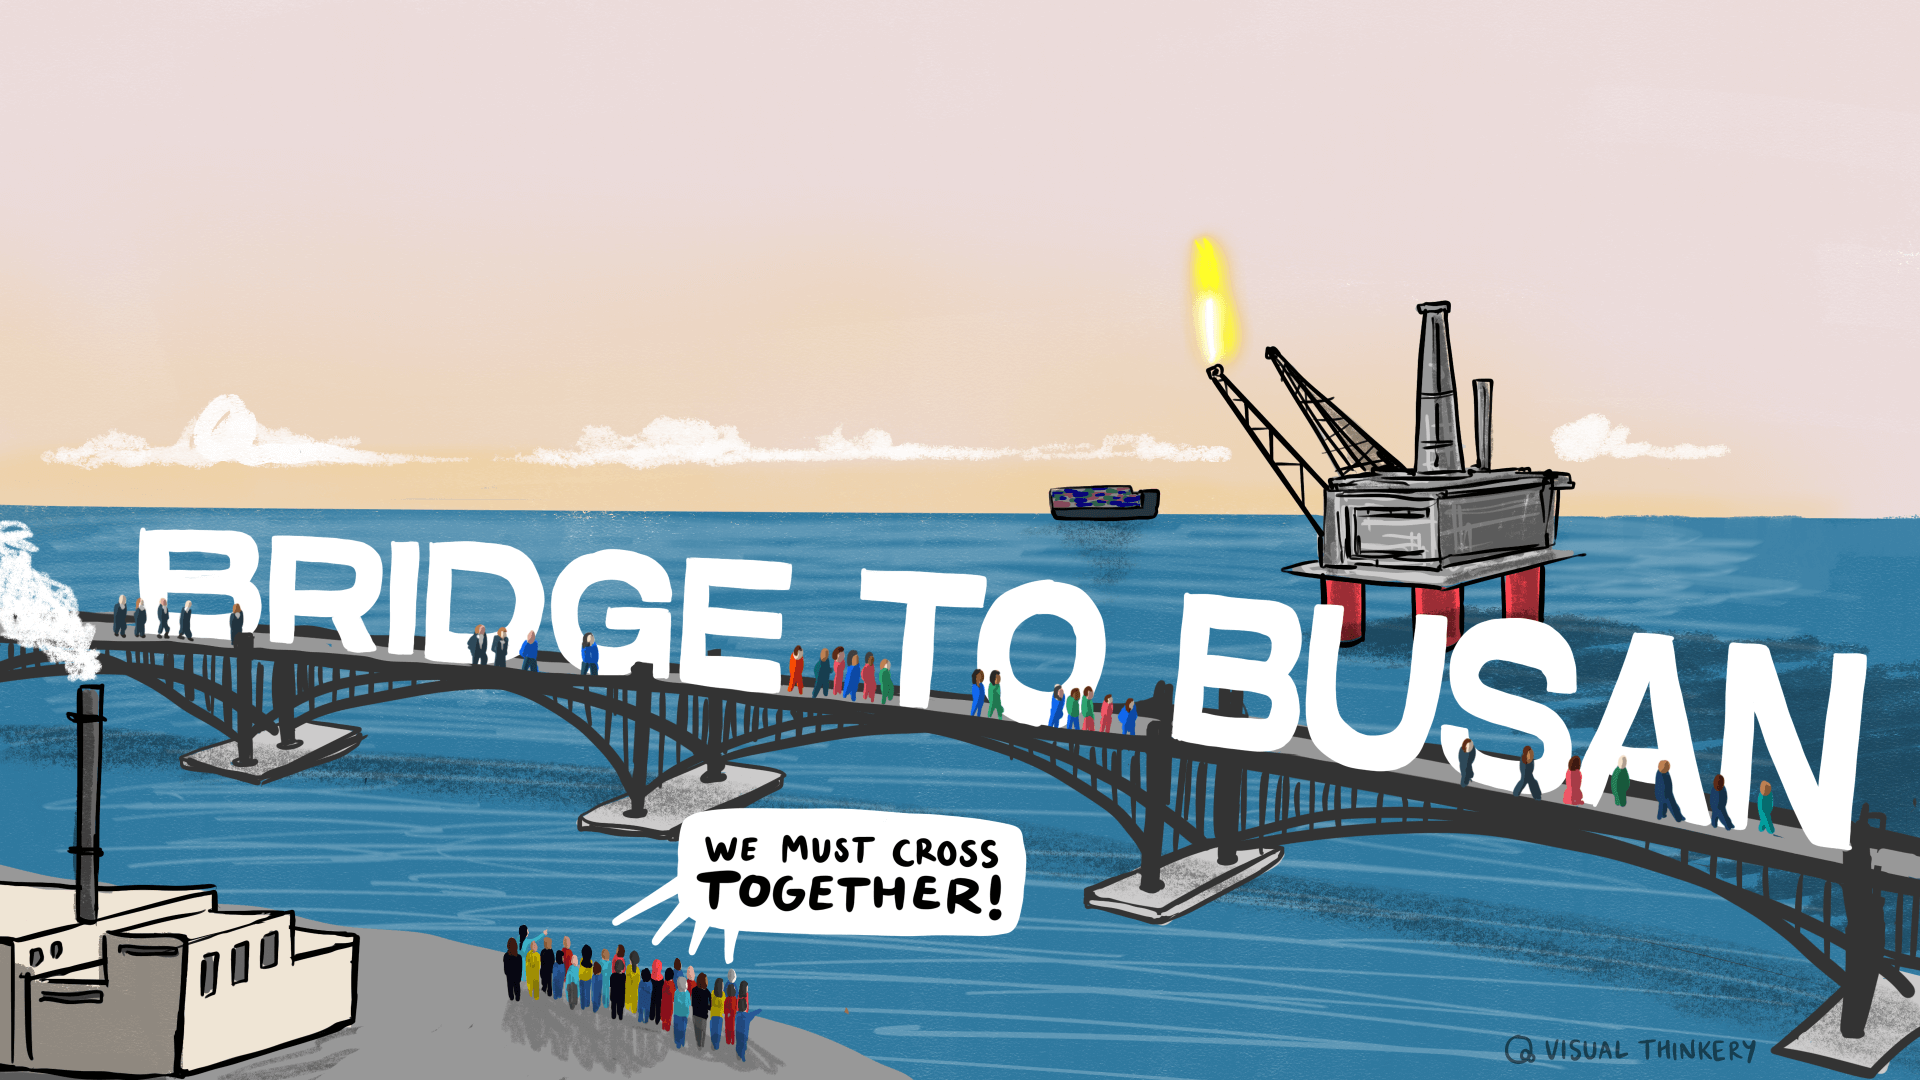 The bridge to busan